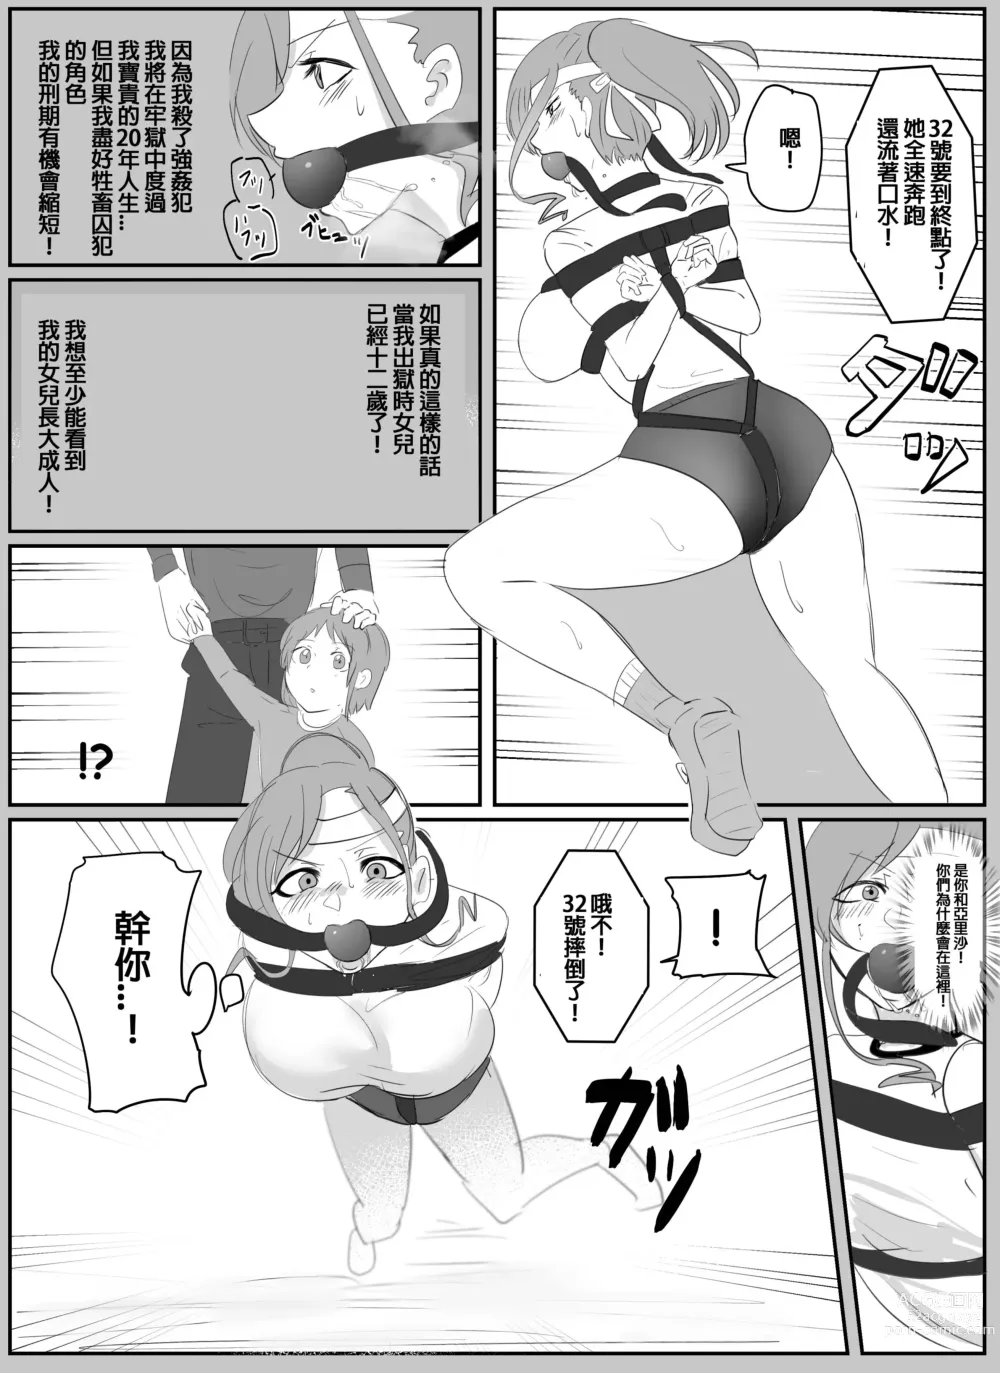 Page 18 of doujinshi 佳奈美囚人運動會!